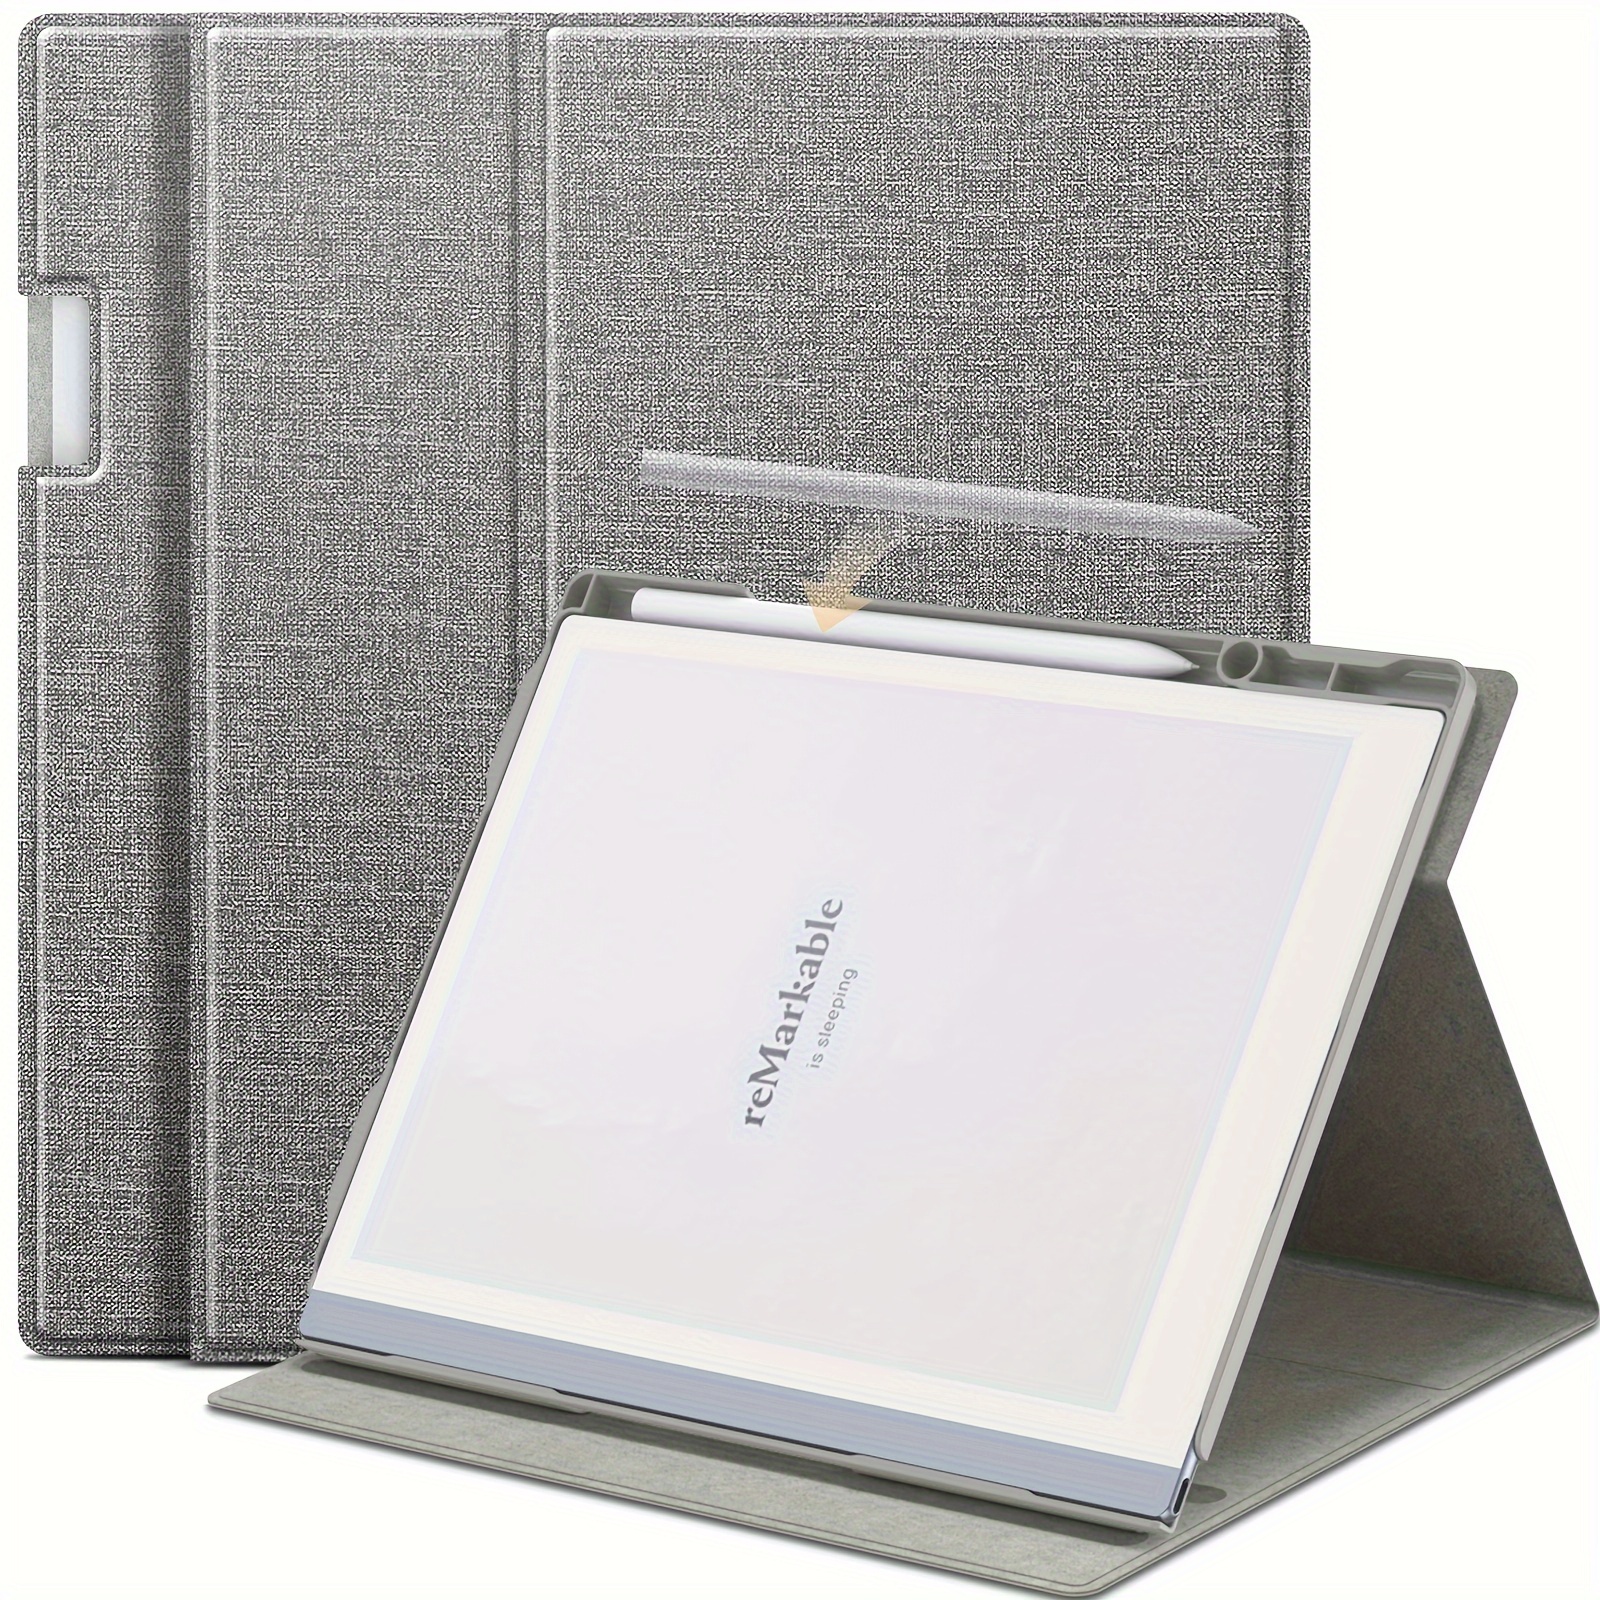 Remarkable 2 Paper Tablet - electronics - by owner - sale - craigslist